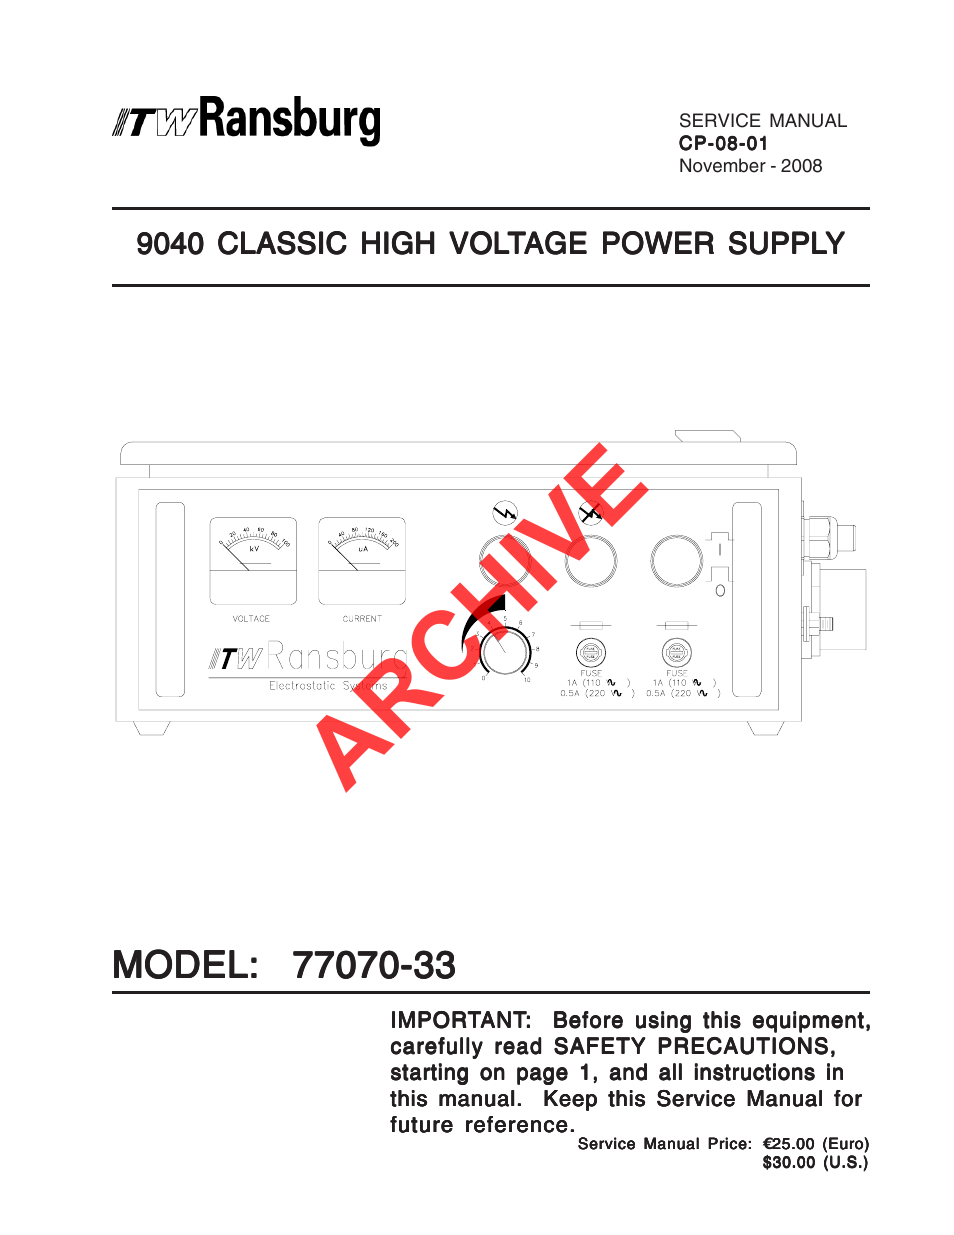 9040 Classic HV Power Supply 77070-33